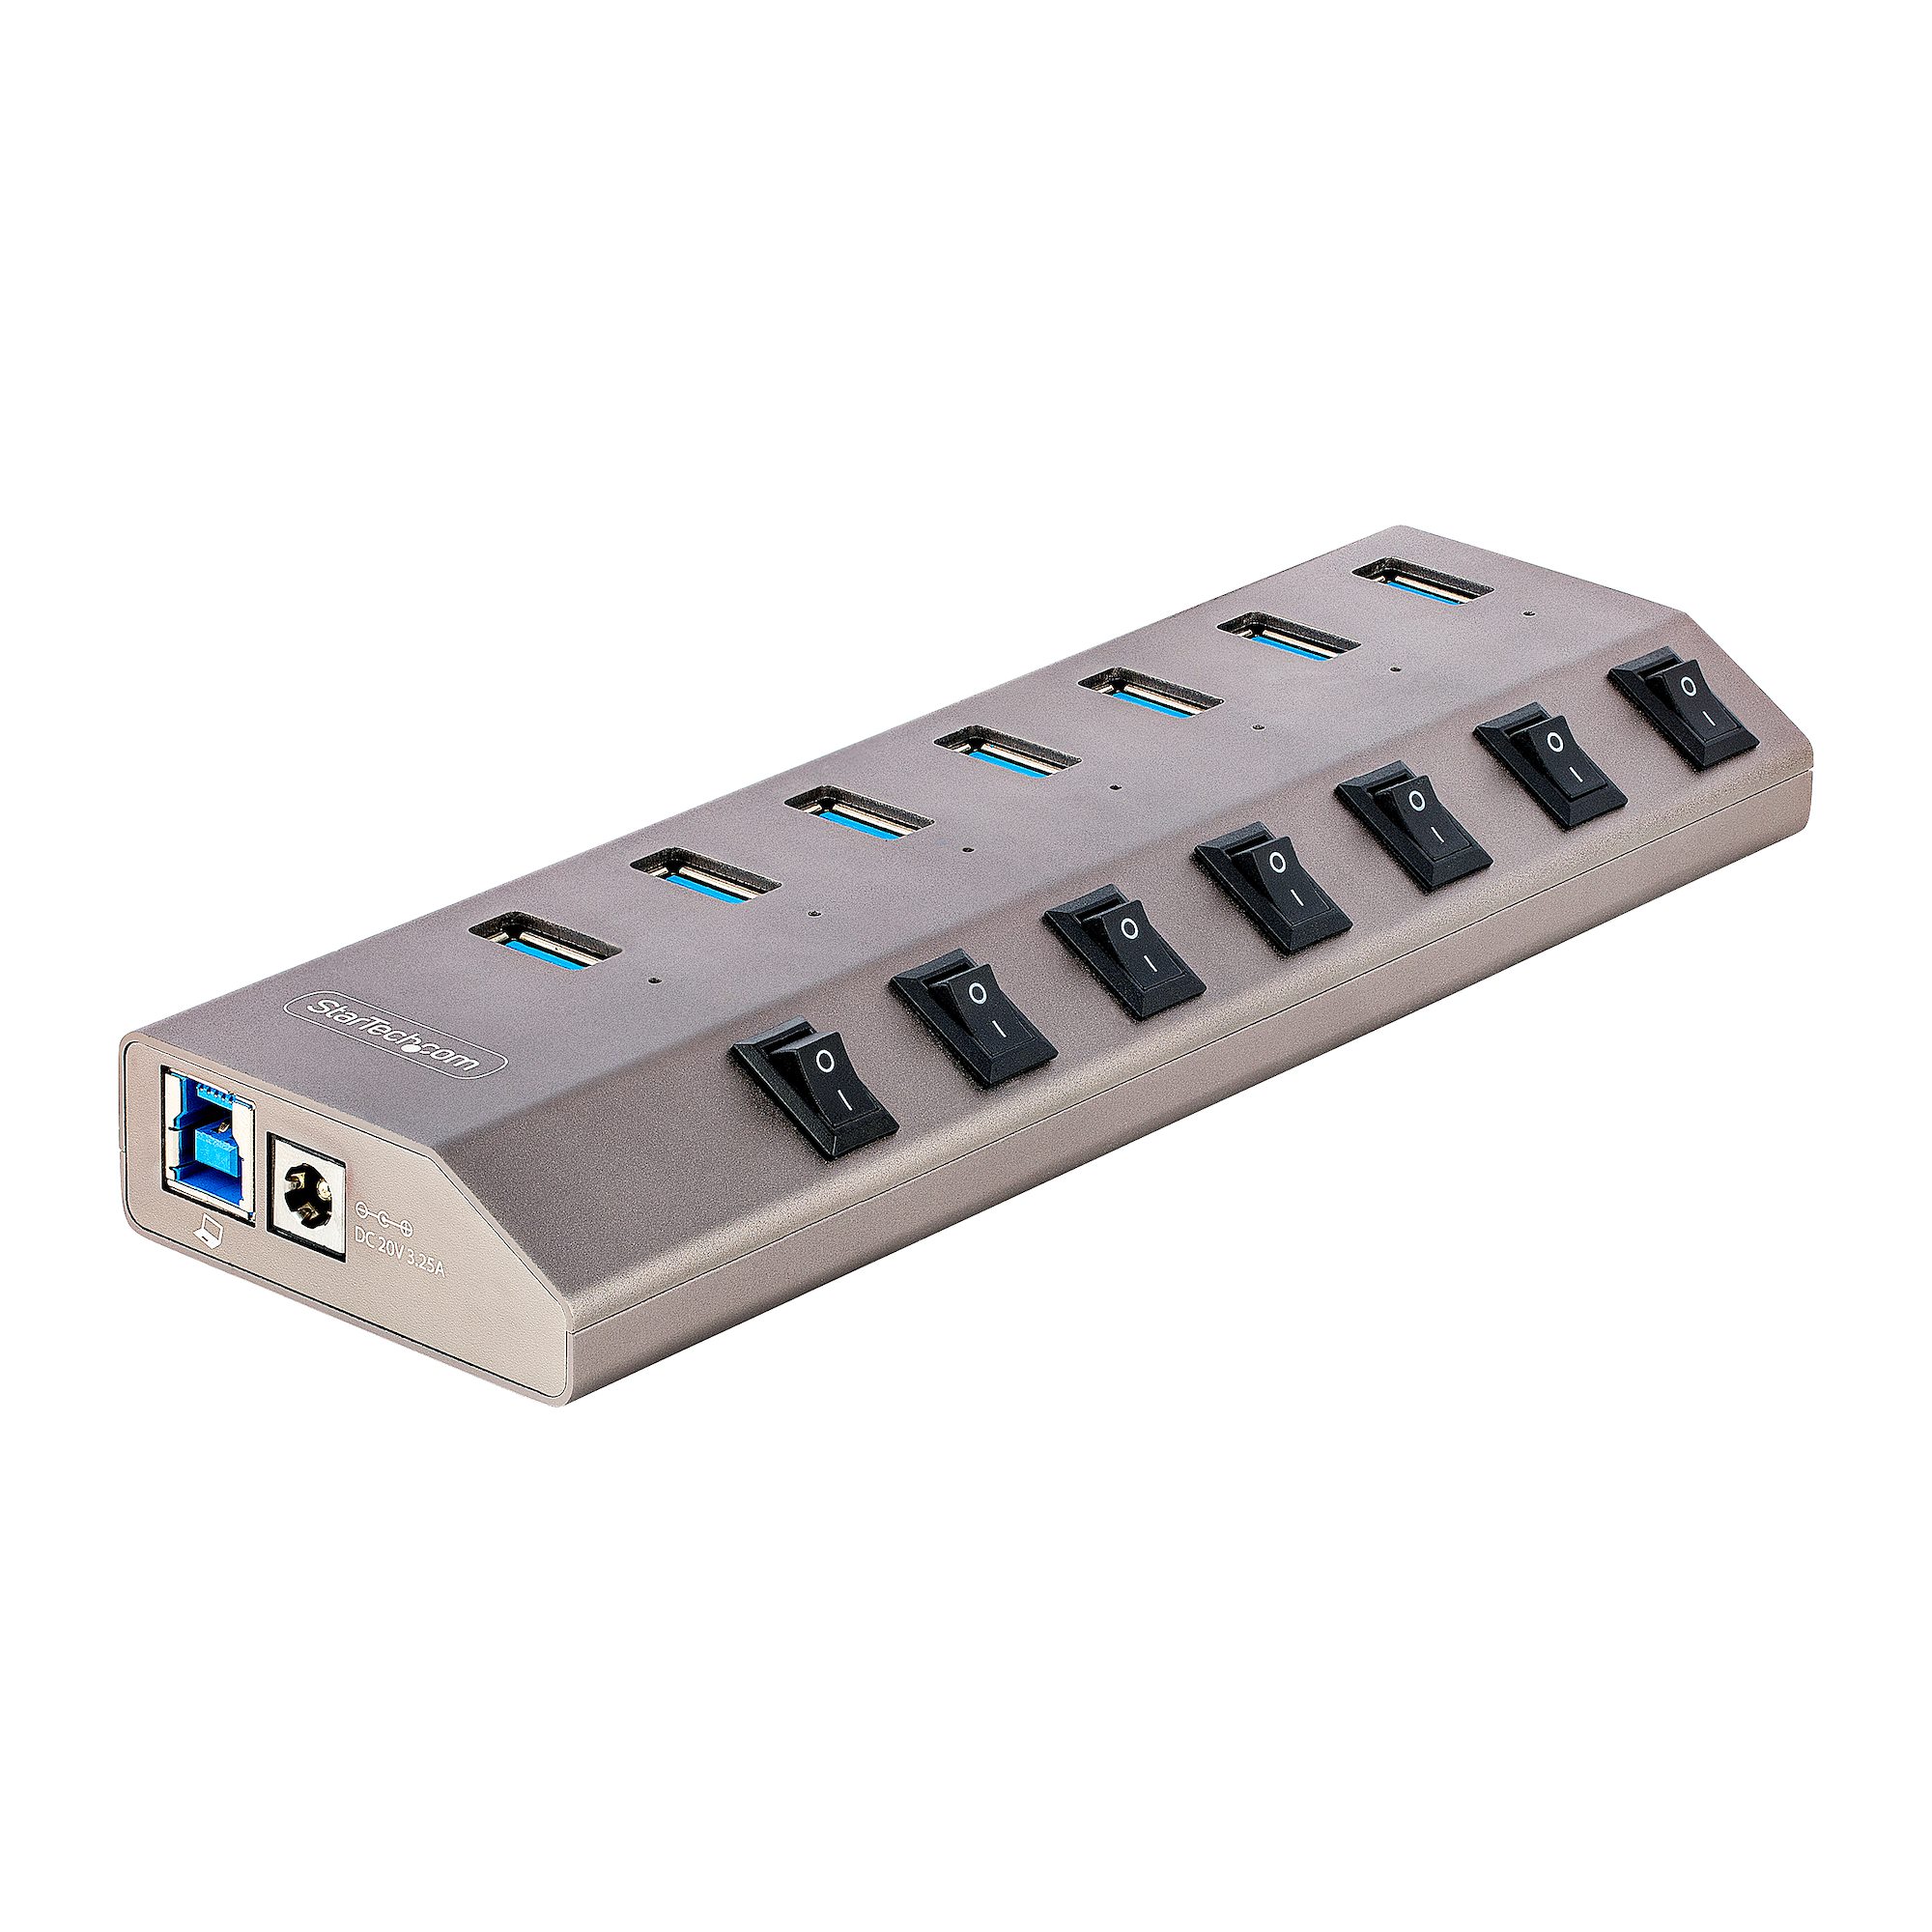 USB Hub 3.0 Splitter,7 Port USB Data Hub with Individual On/Off